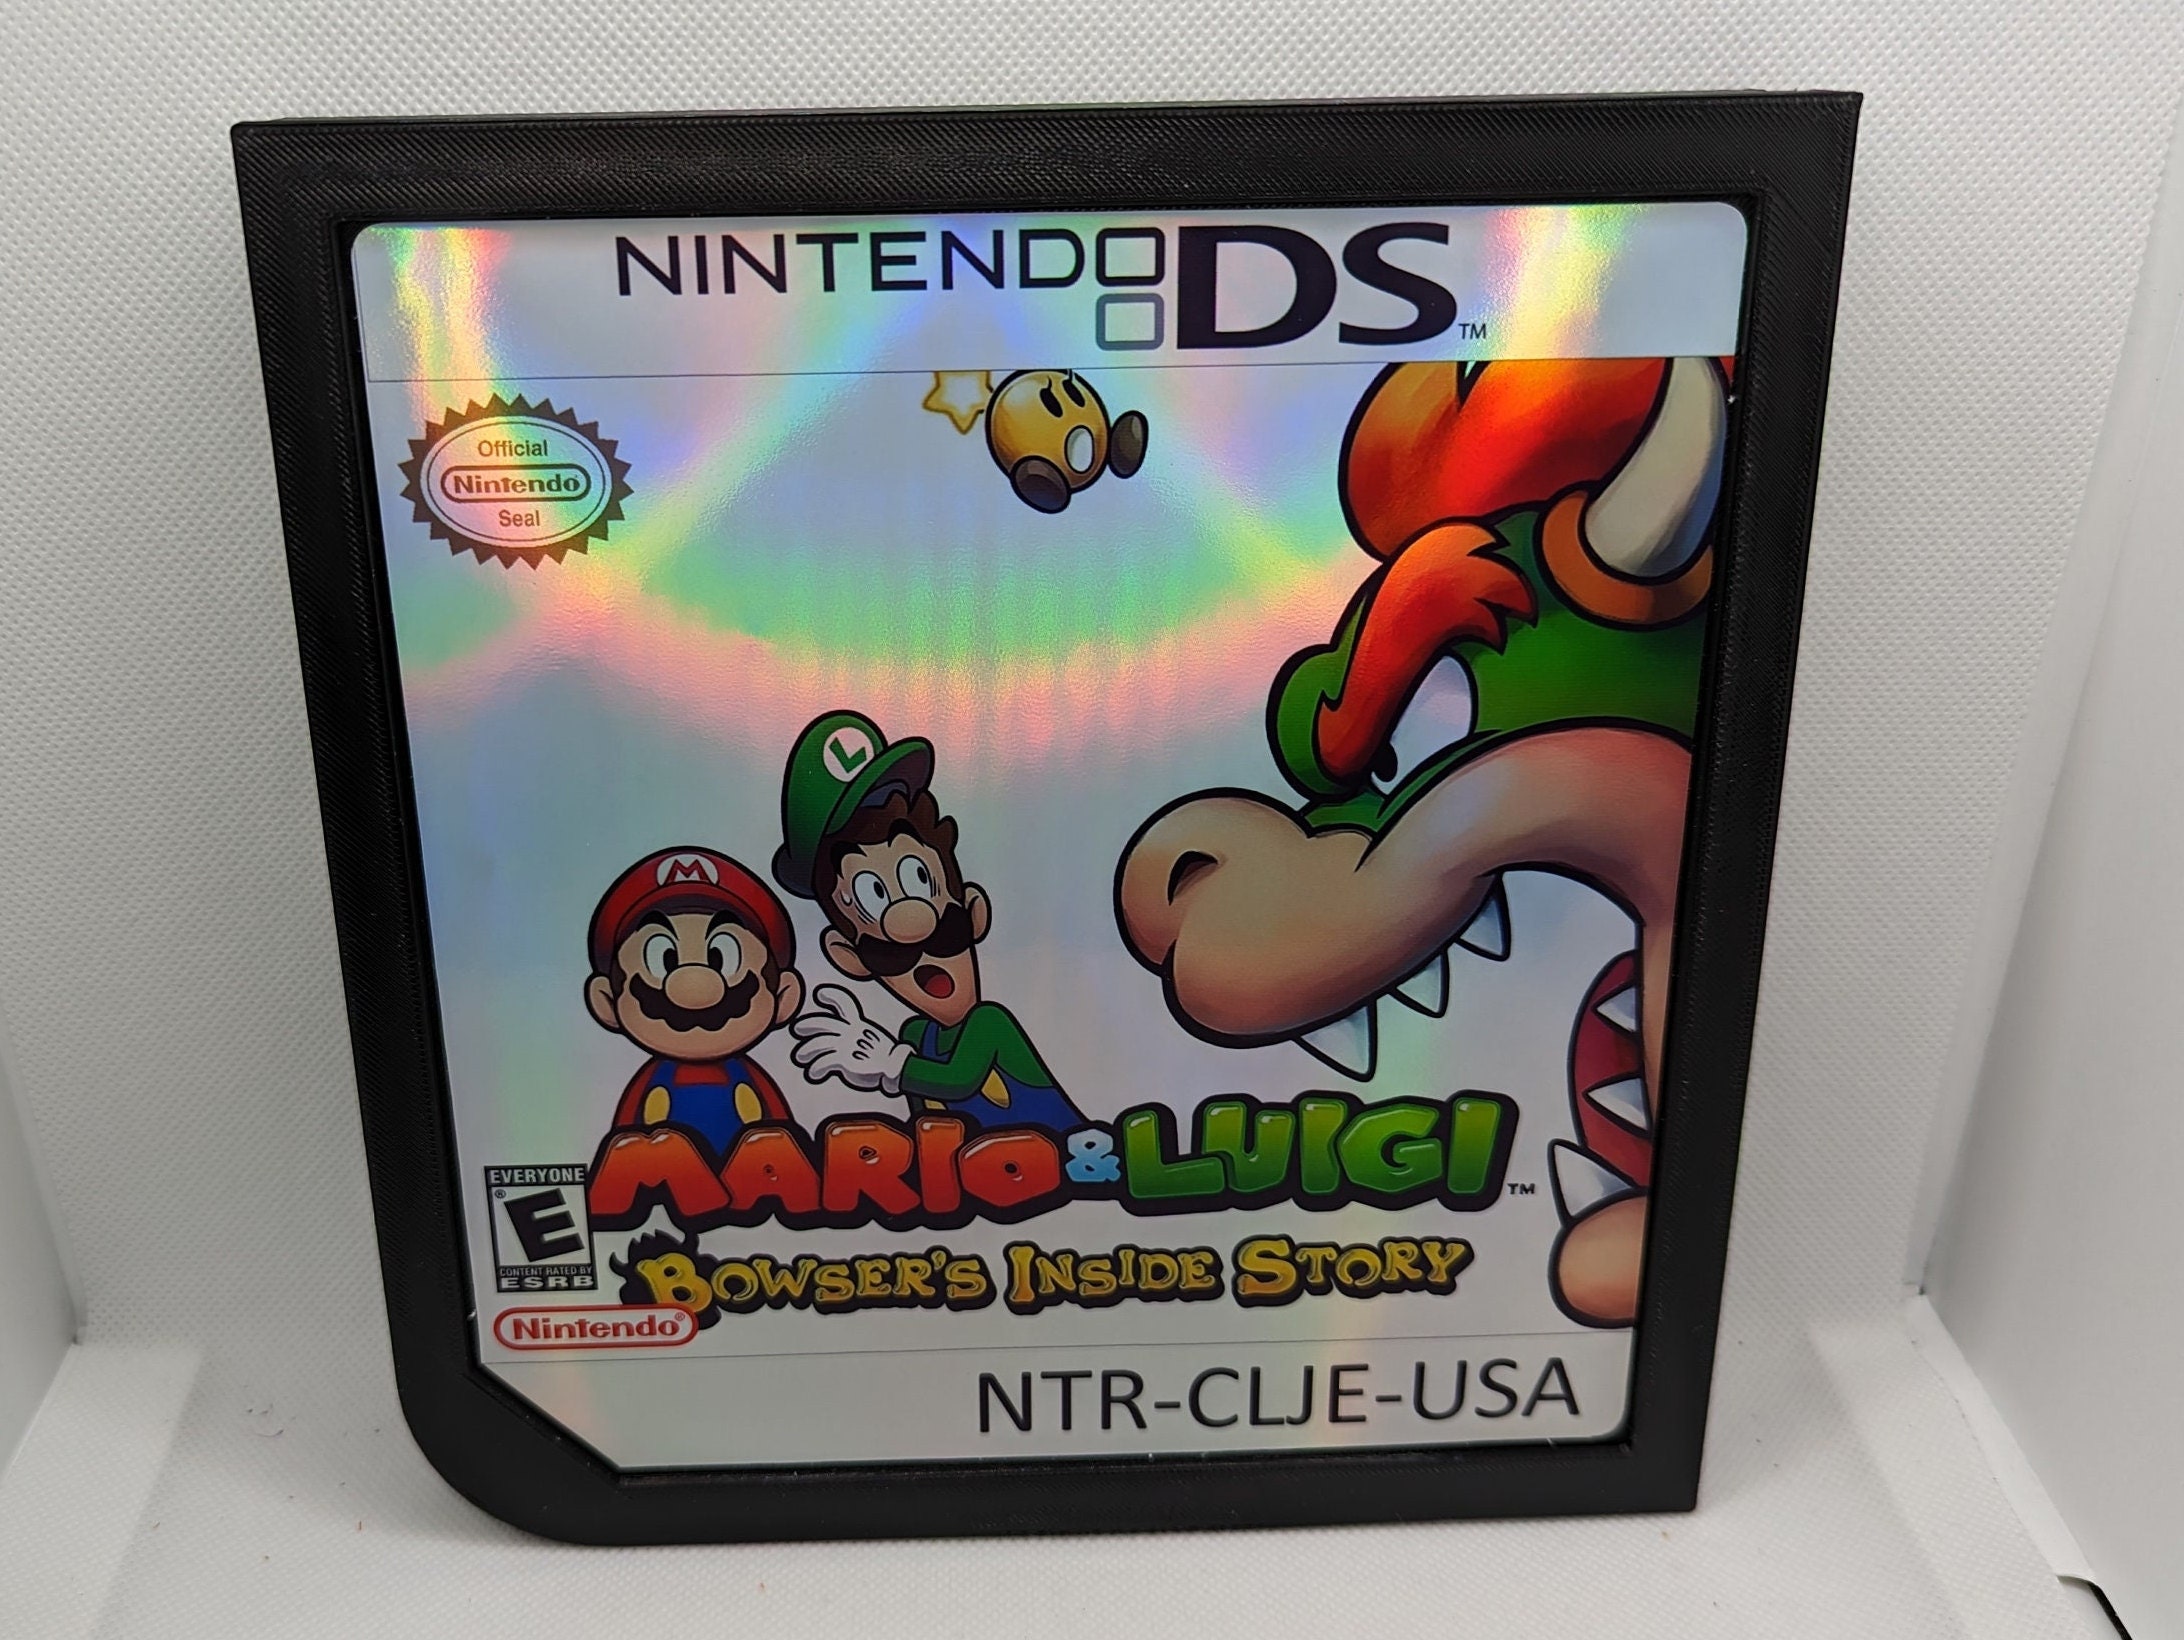 Mario & Luigi: Bowser's Inside Story - Data Crystal